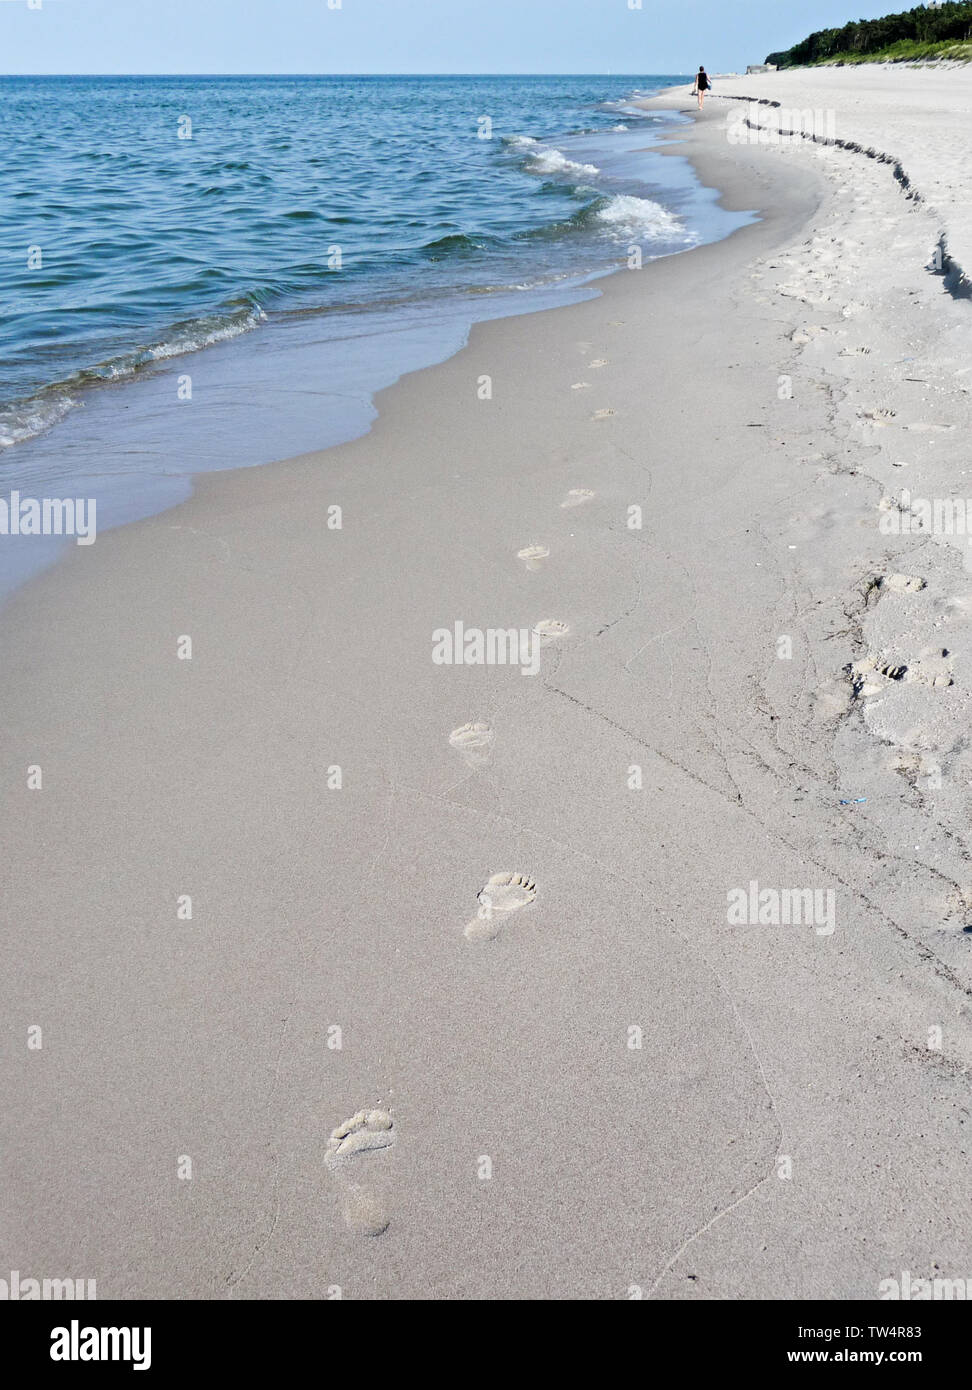 Footprints on beach sand vanishing in sea waves,  in the distance single human figure walking along the seacoast Stock Photo